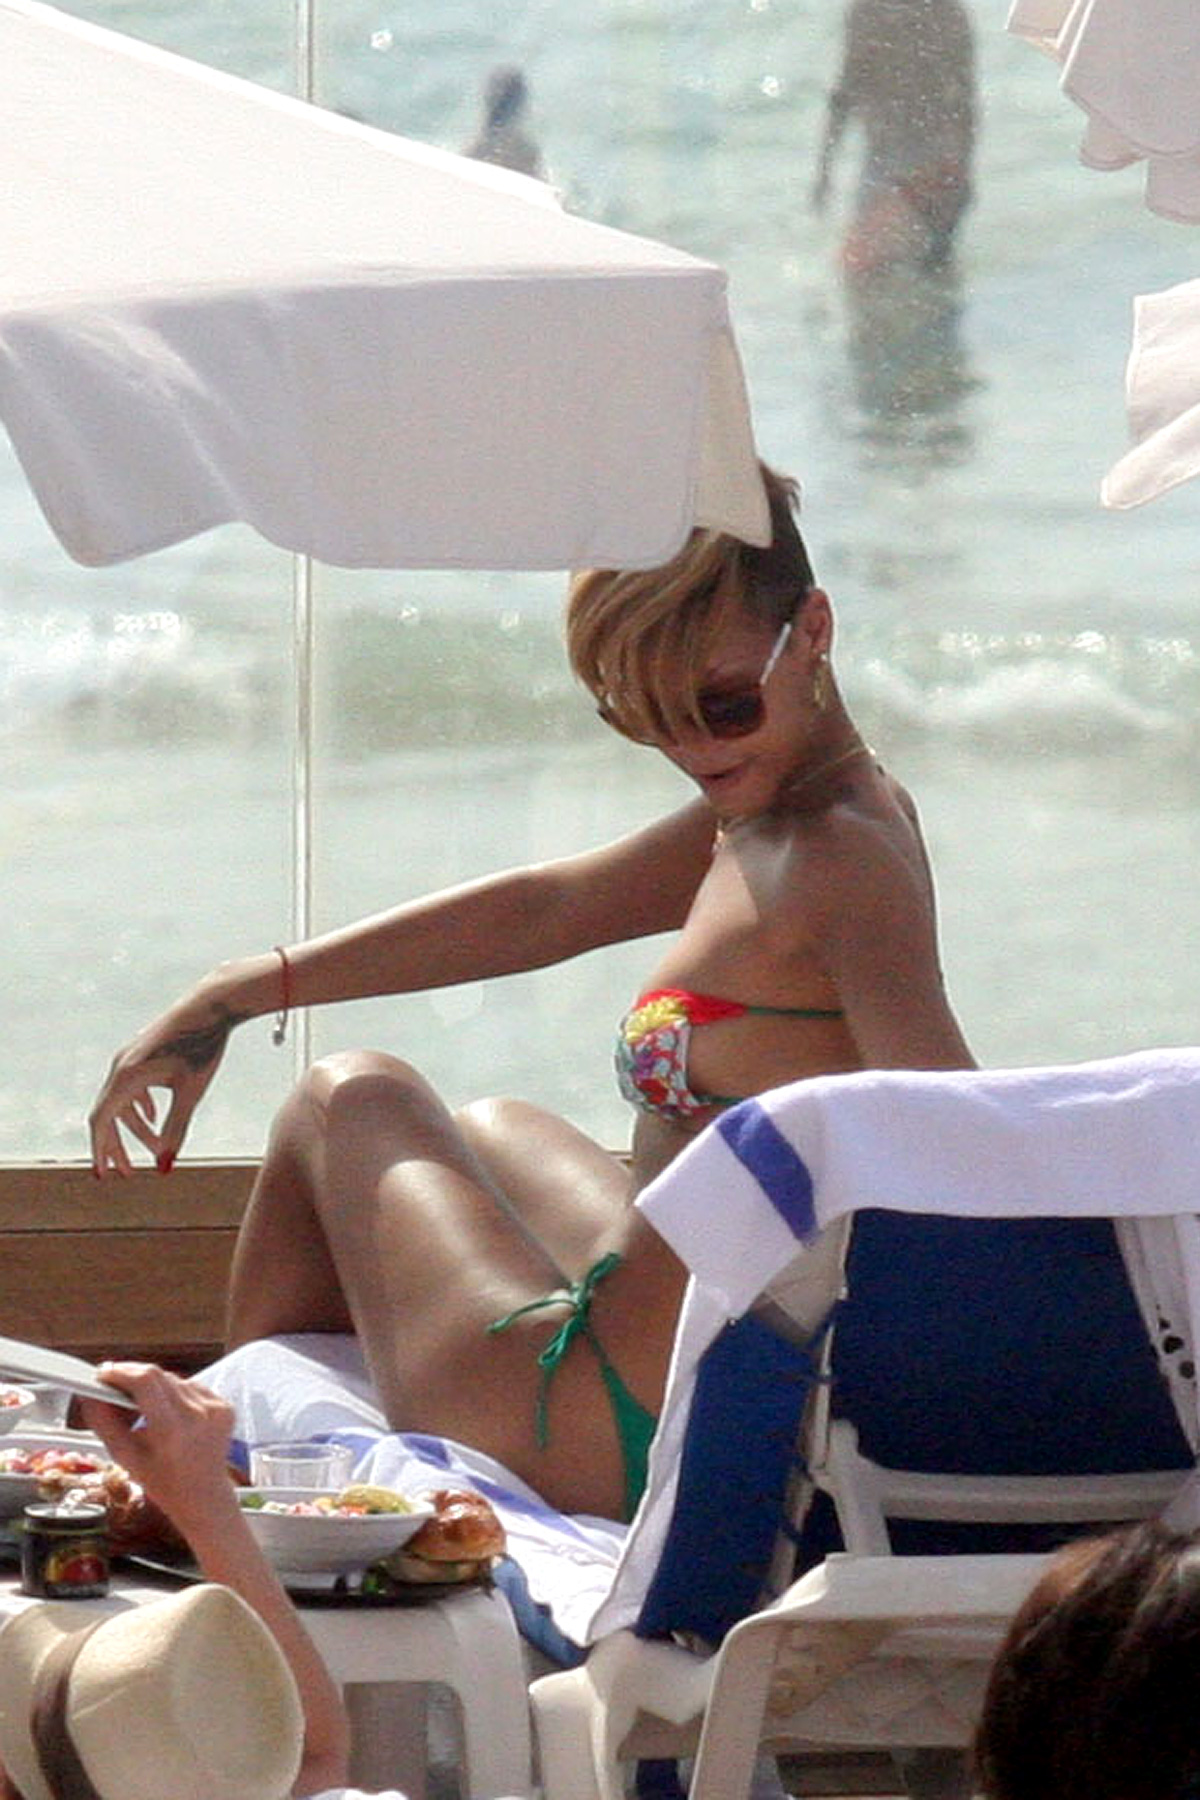 Rihanna's BIKINI BODY at the Pool!!